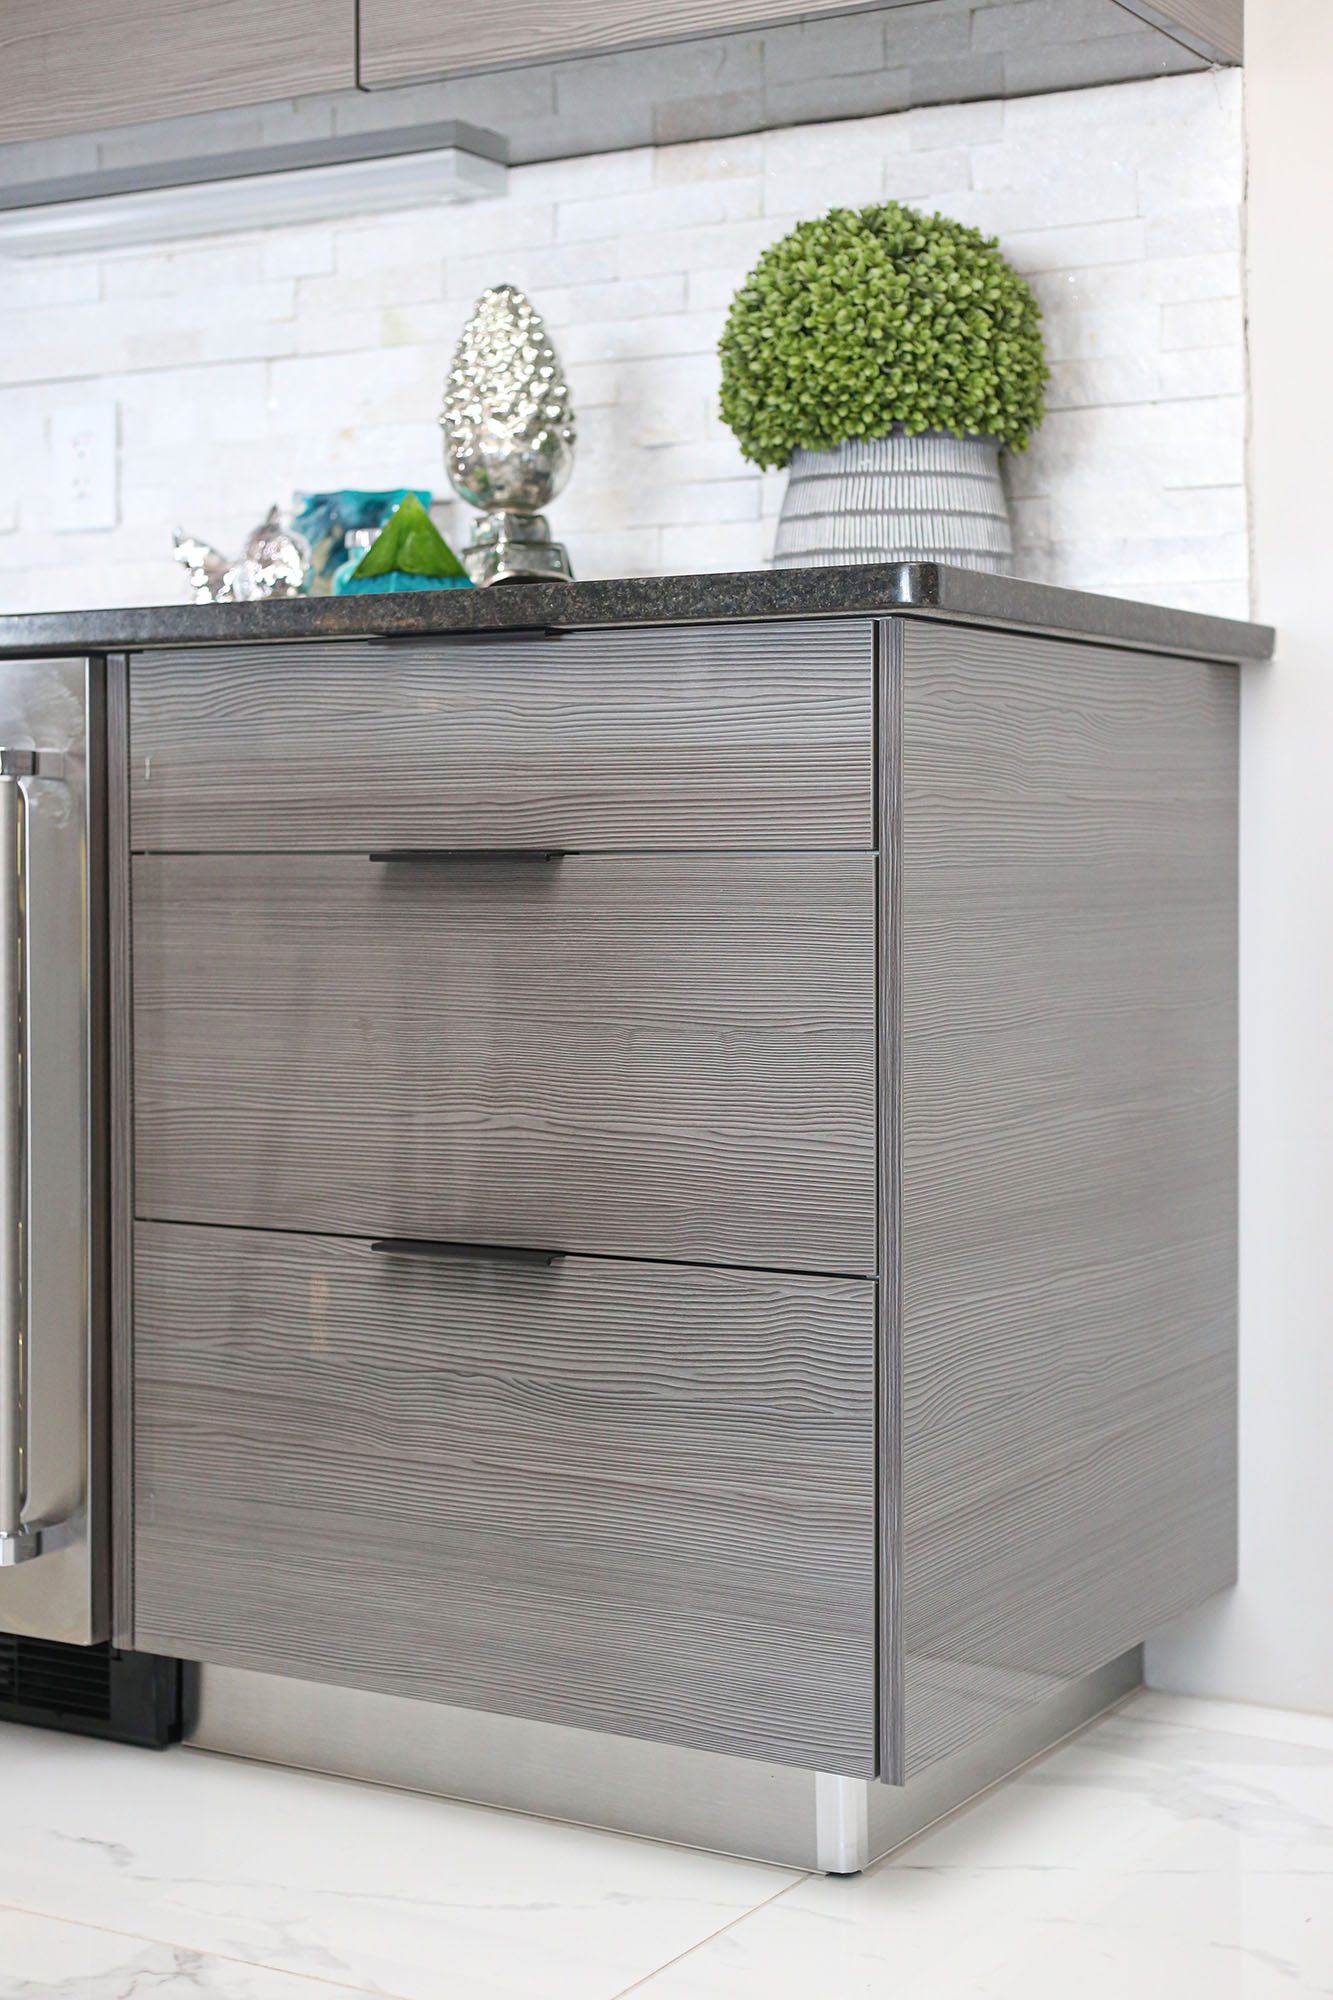 Base Laminate Drawer Cabinet Black Counter White Stone Backsplash Elite Cabinets Tulsa Cabinet Design Remodel